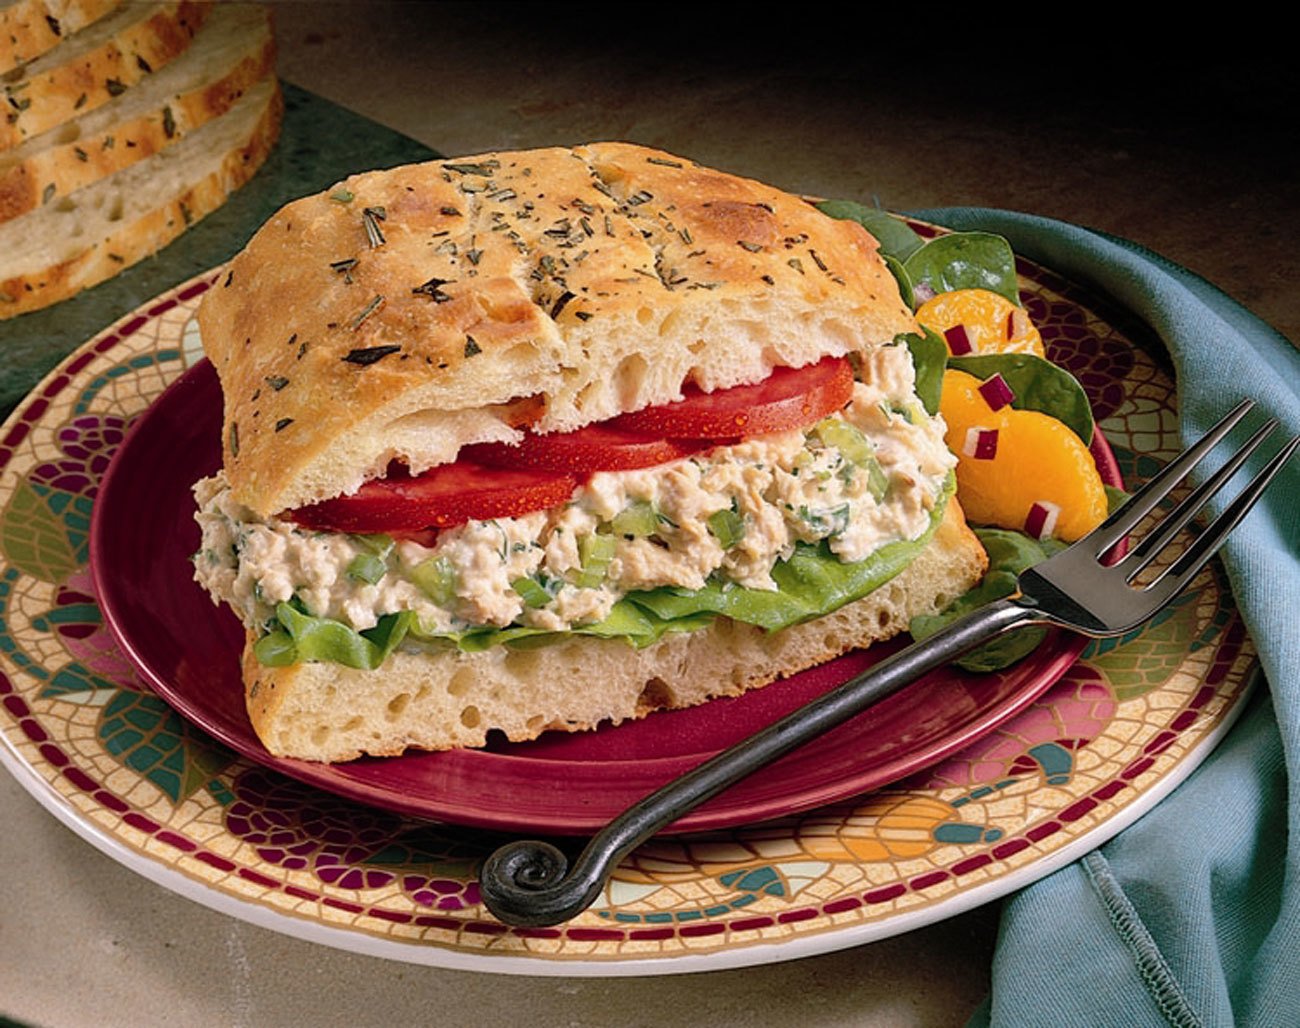 salmon salad sandwich | Stay at Home Mum.com.au